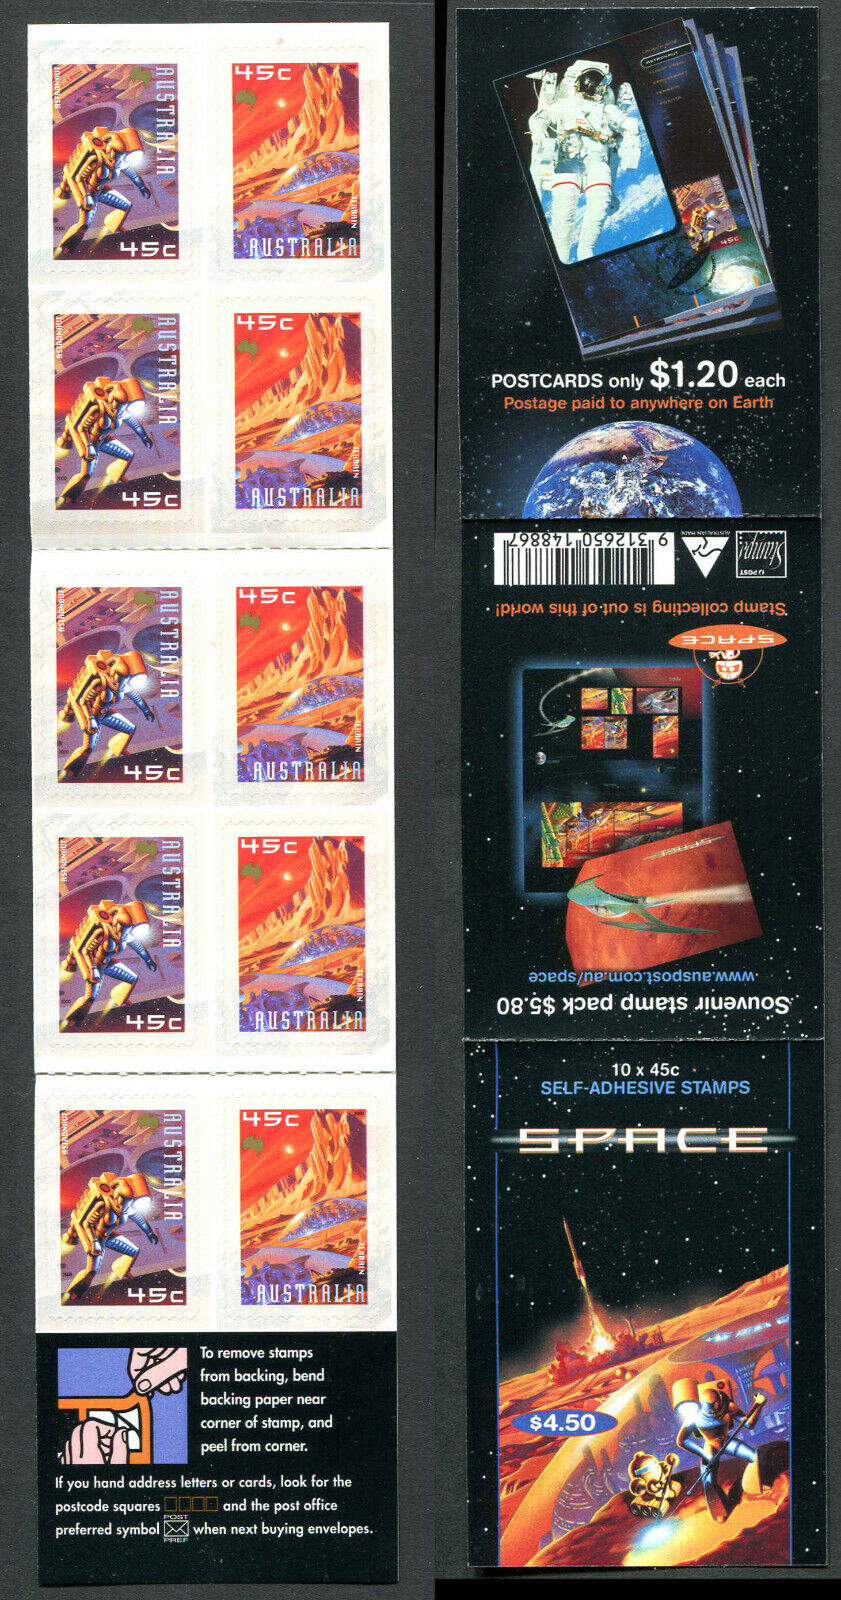 Australia 2000 Space Stamp Booklet Scott 1915-1916